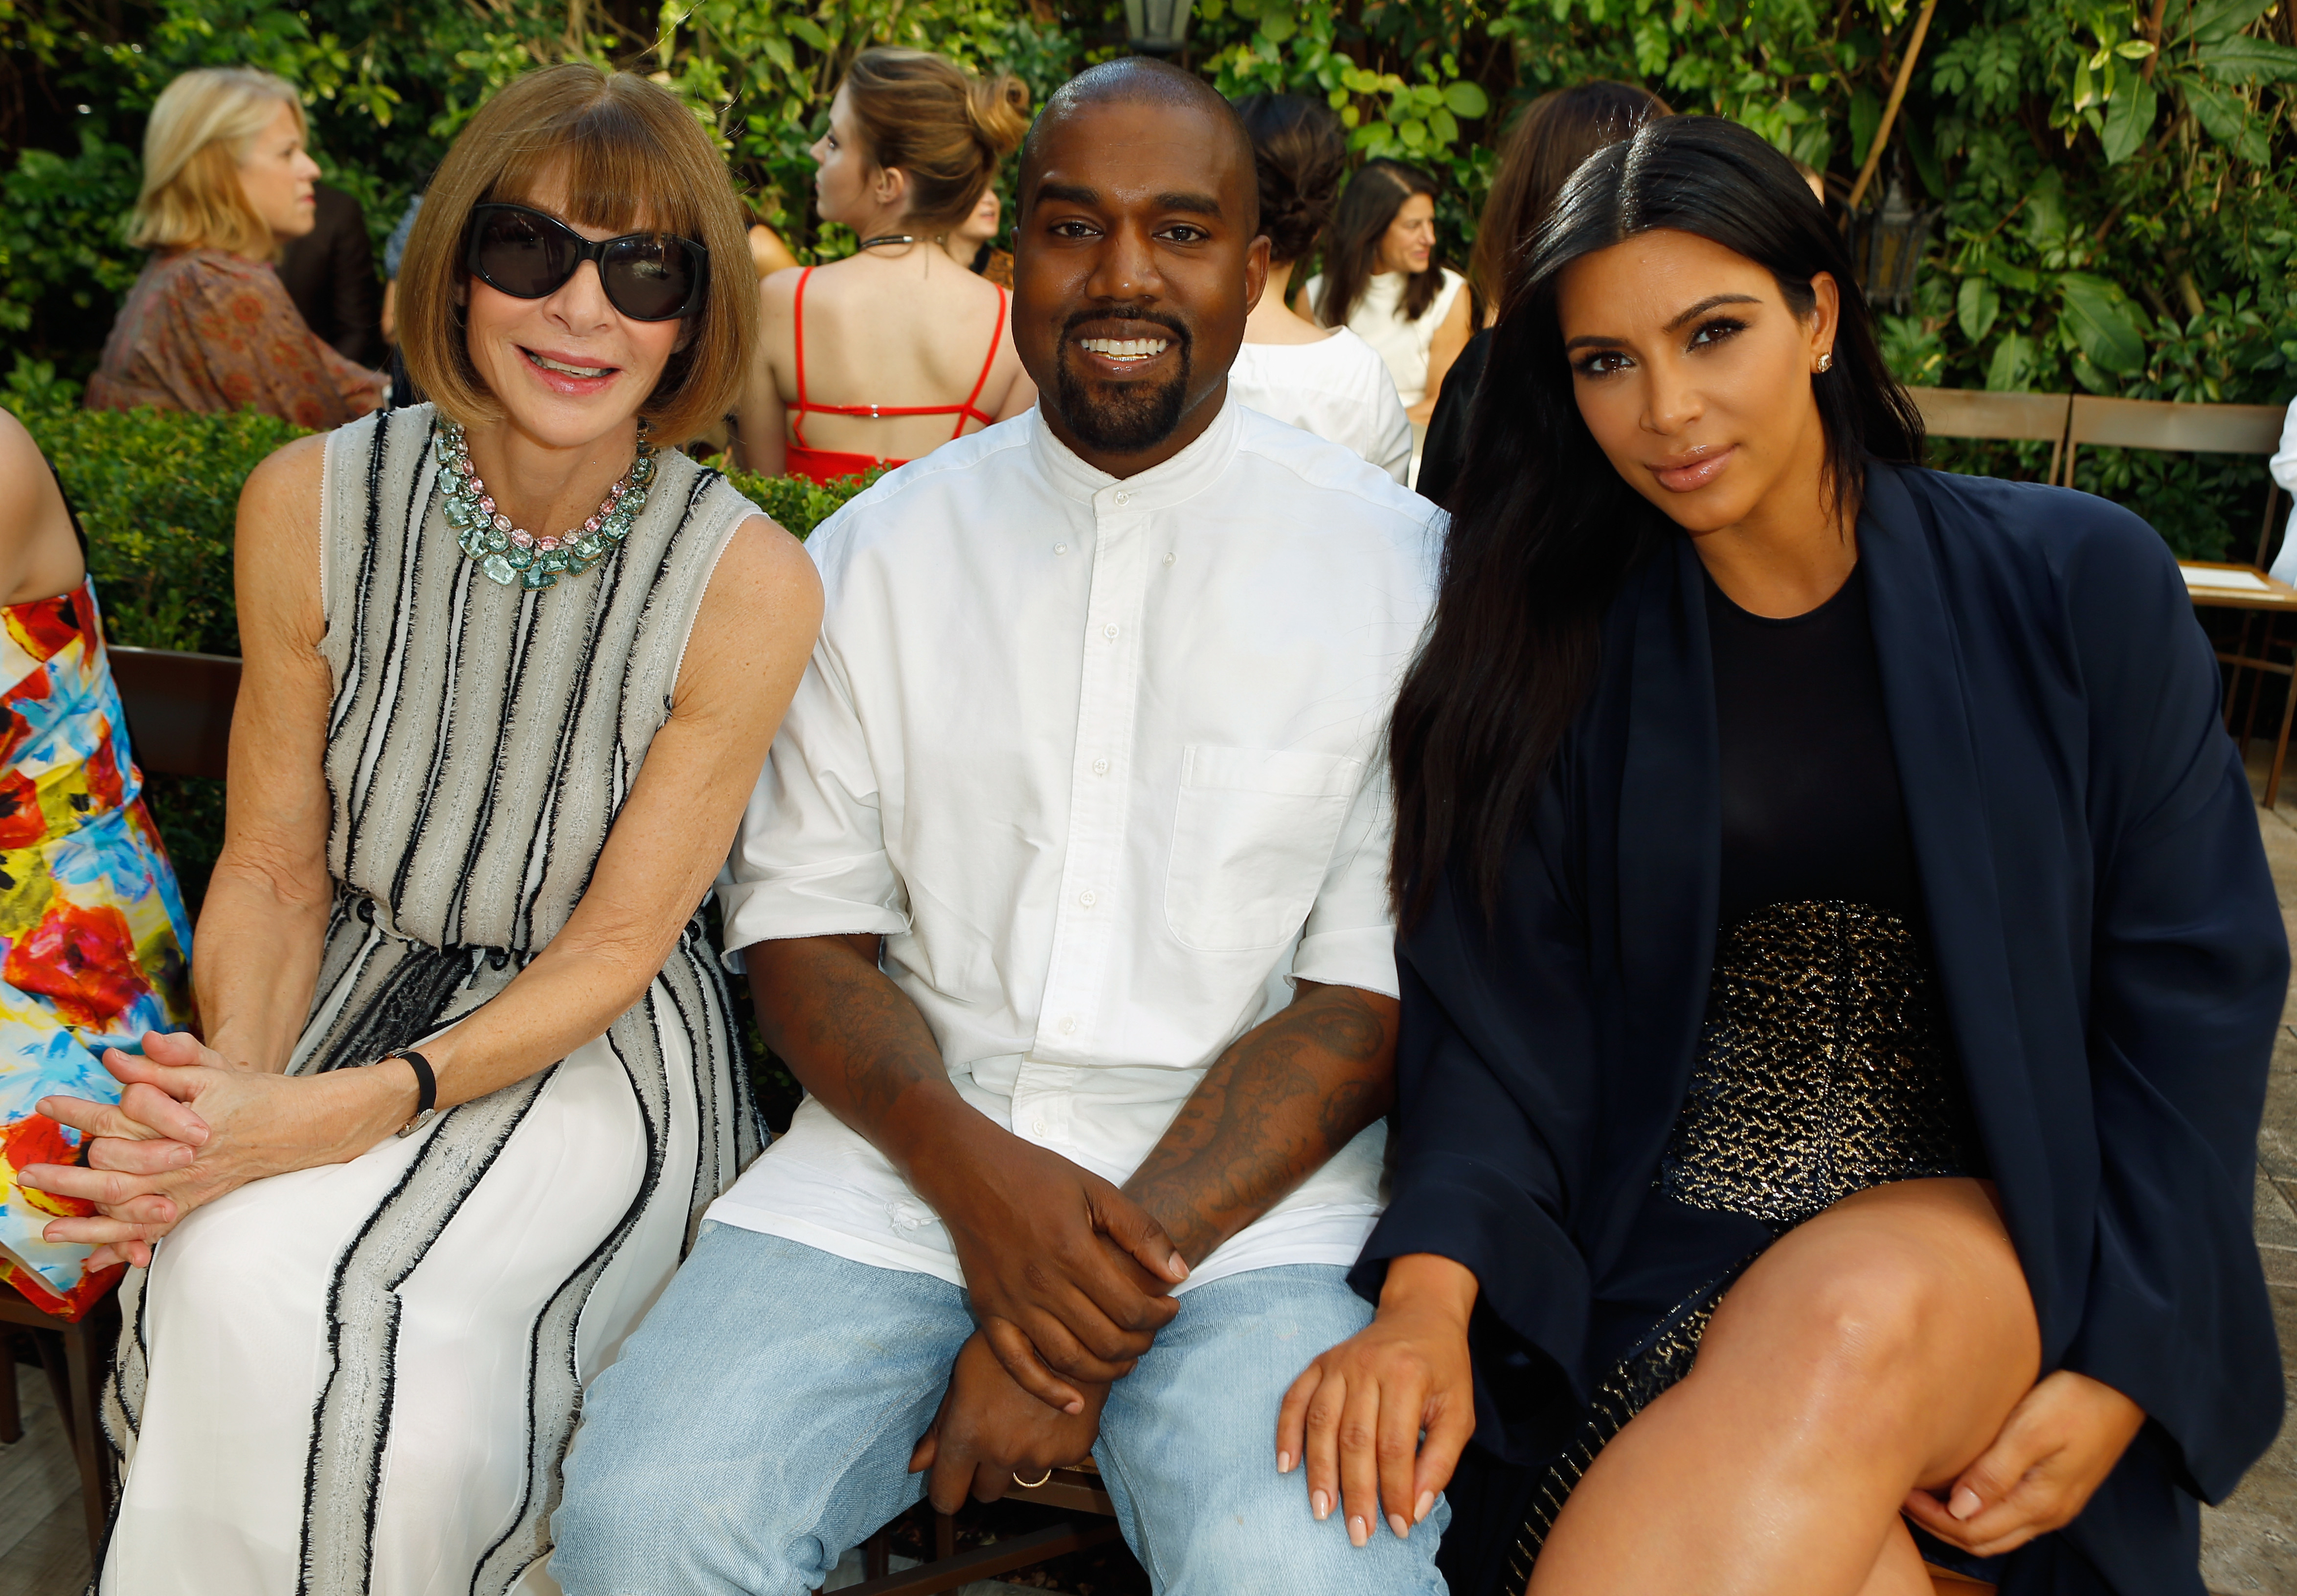 Closeup of Anna Wintour, Kanye West, and Kim Kardashian